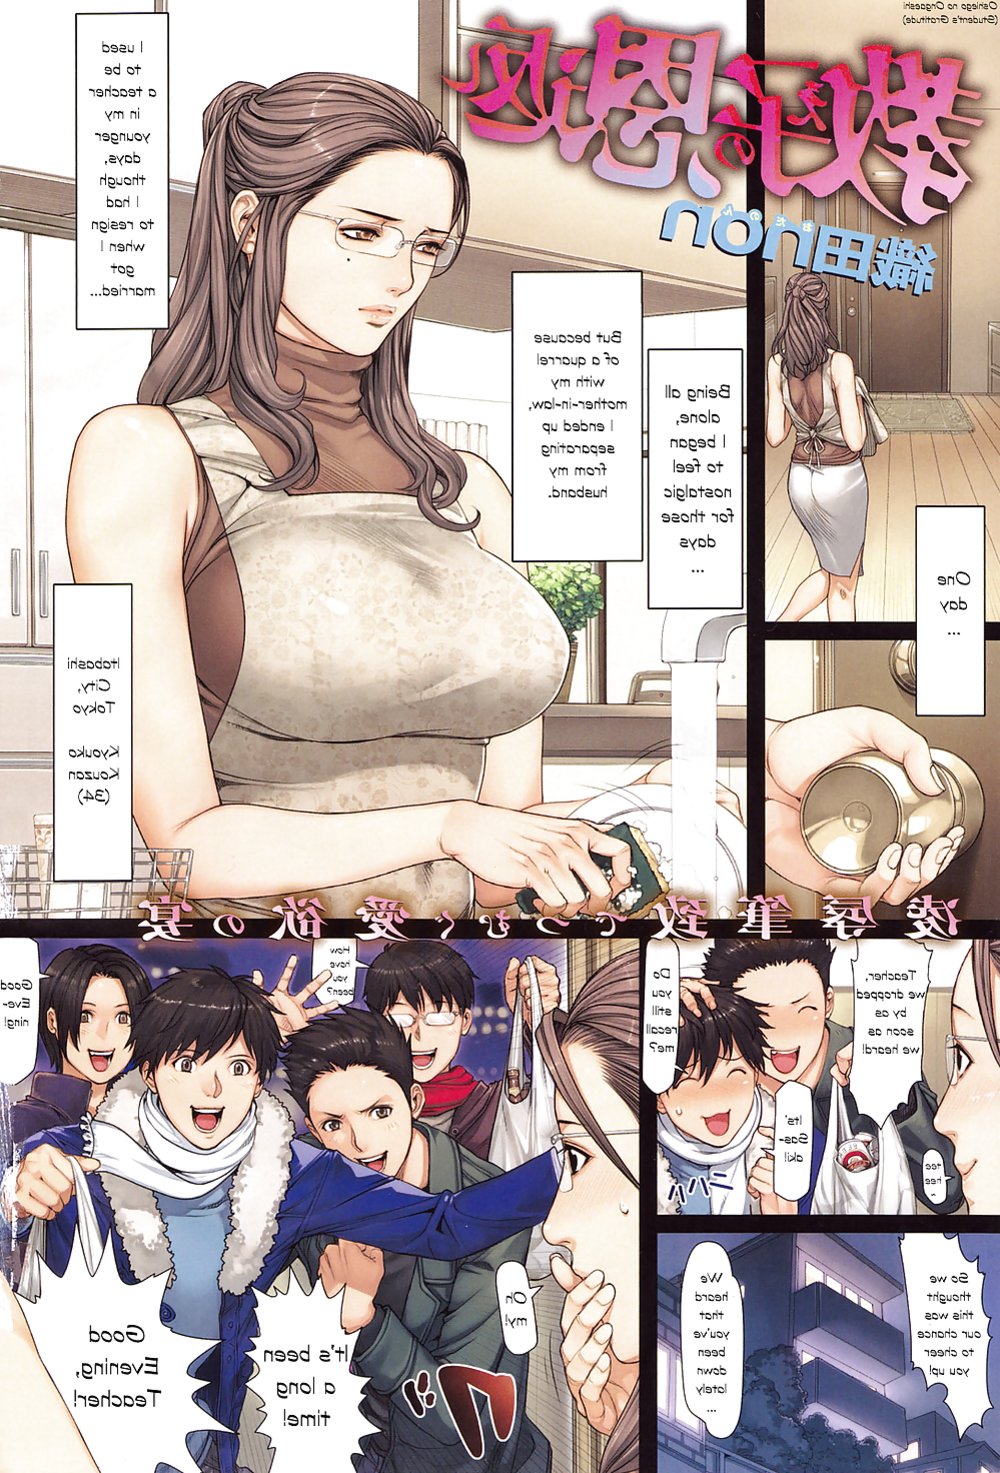 Oda Non Artist Manga Illustration Zb Porn